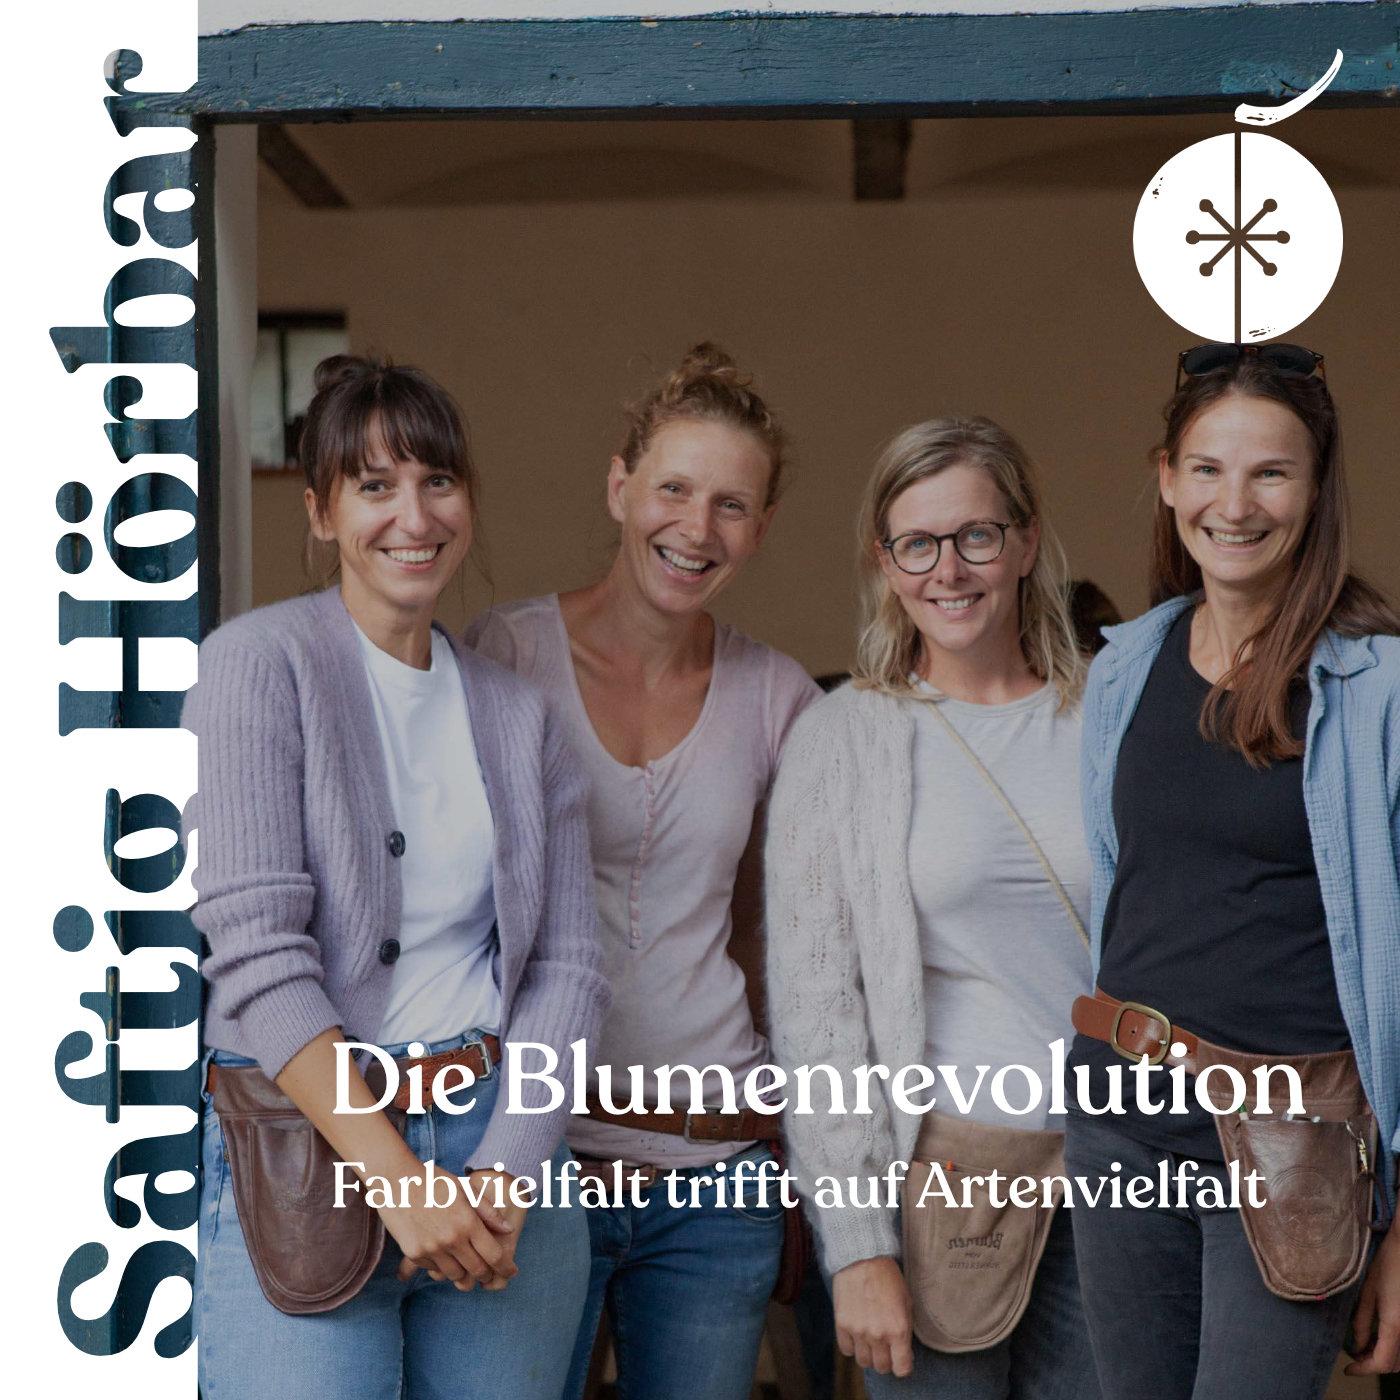 SAFTIG Podcast Cover Blumenrevolution